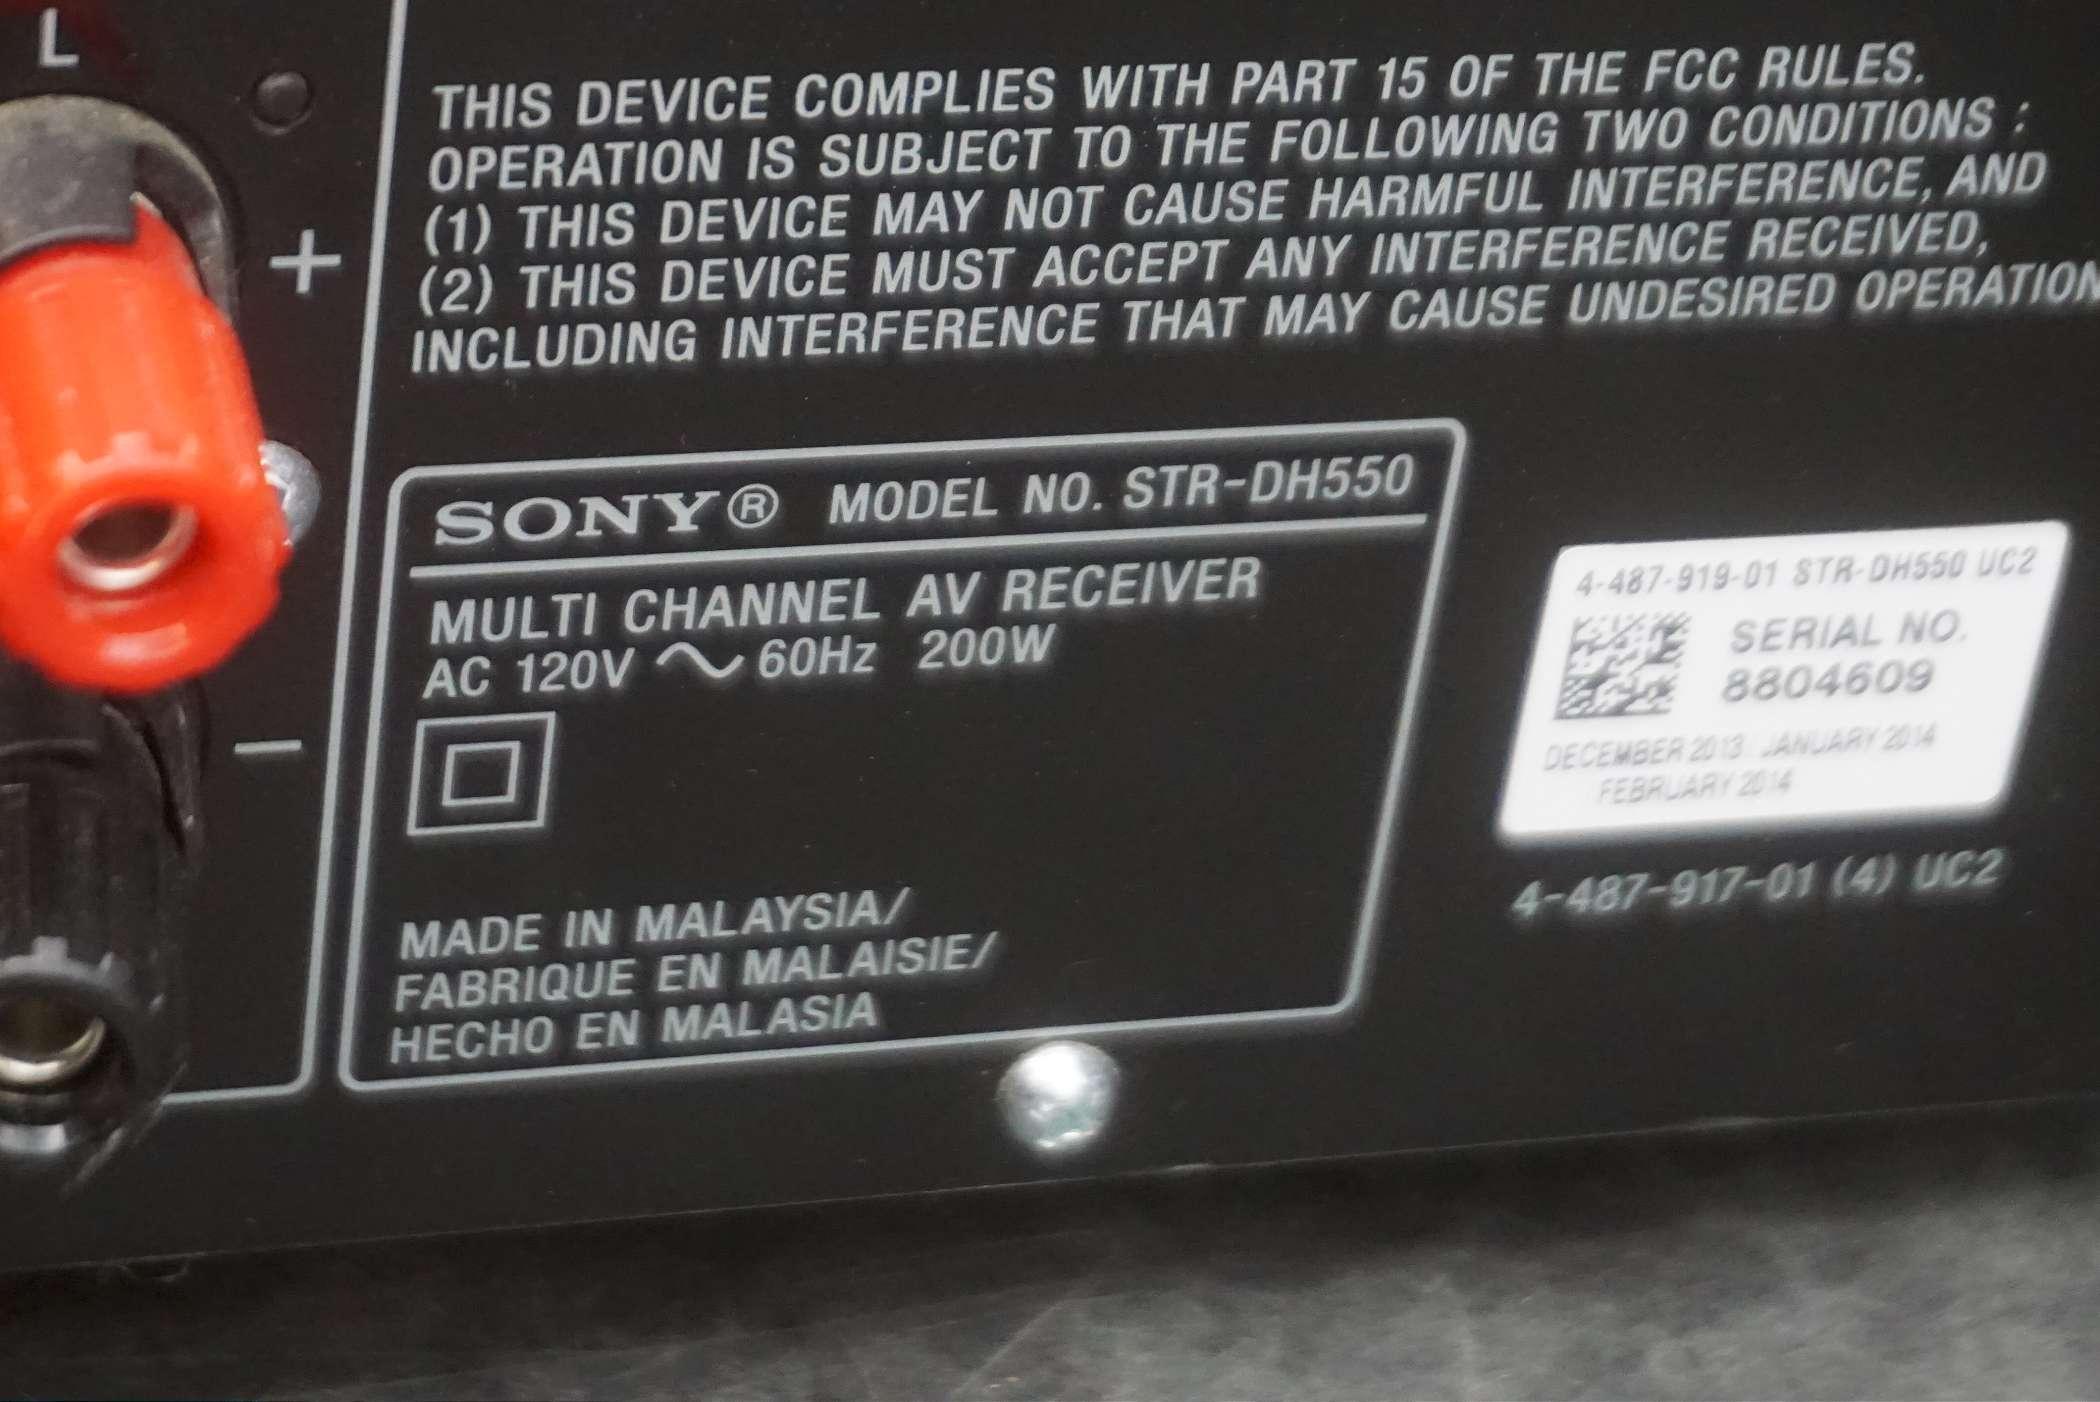 Sony Model No. STR-DH550 Multi-Channel AV Receiver